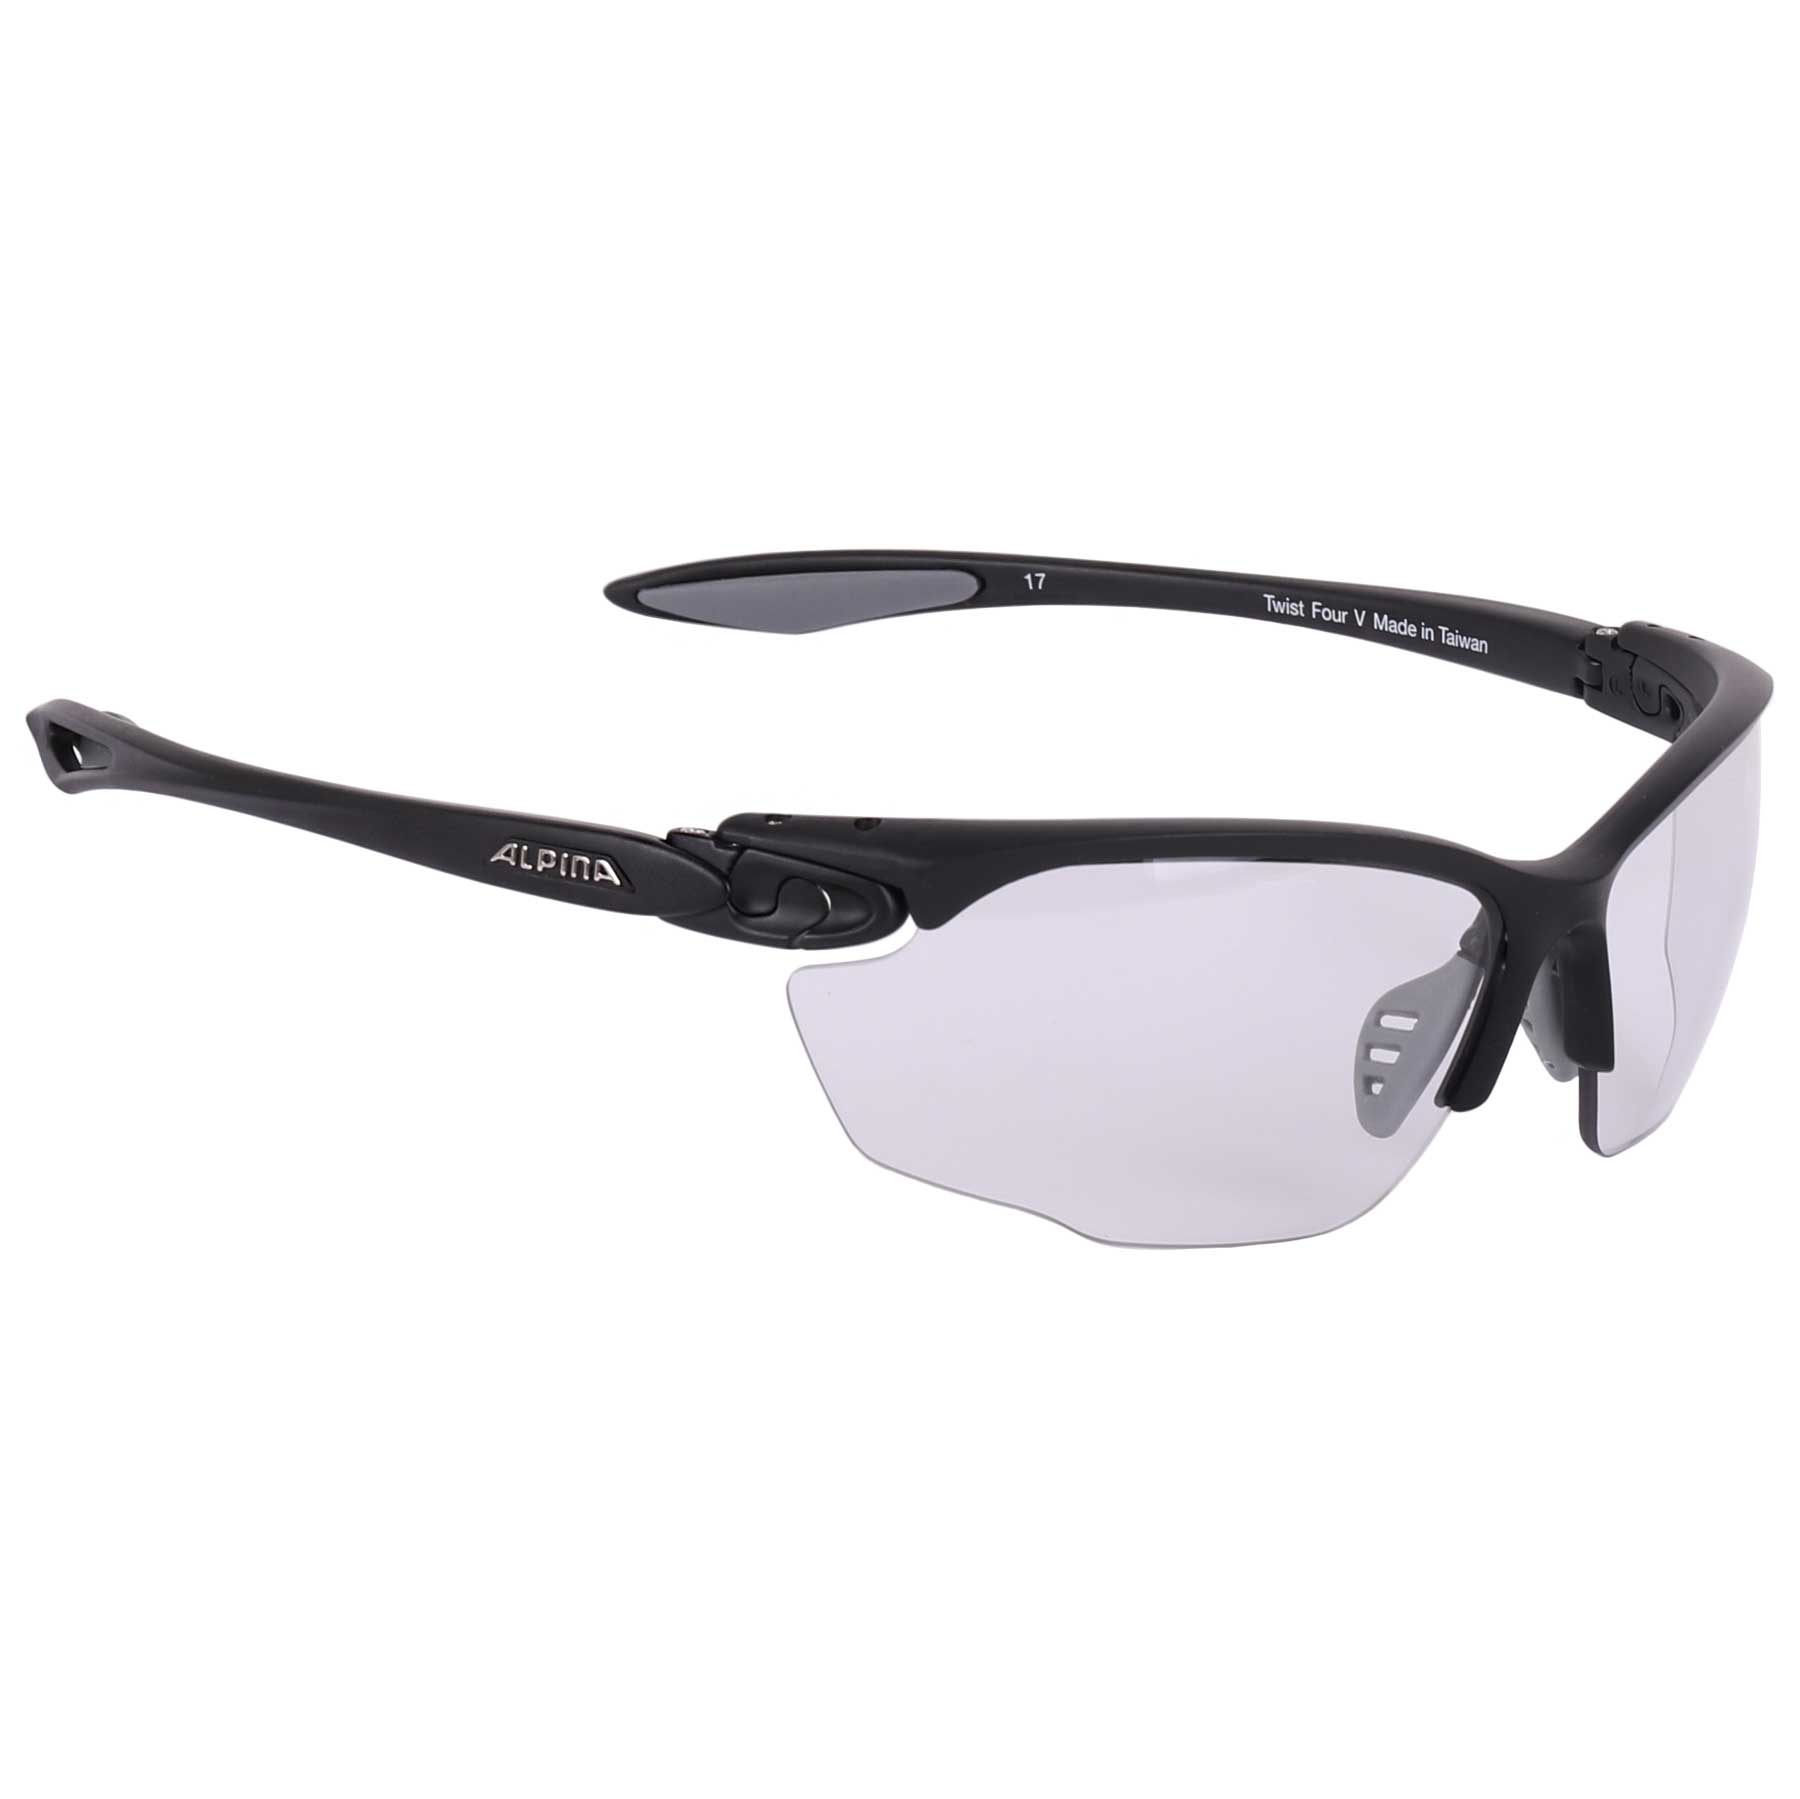 Picture of Alpina Twist Four V Glasses - black grey / Varioflex+ black